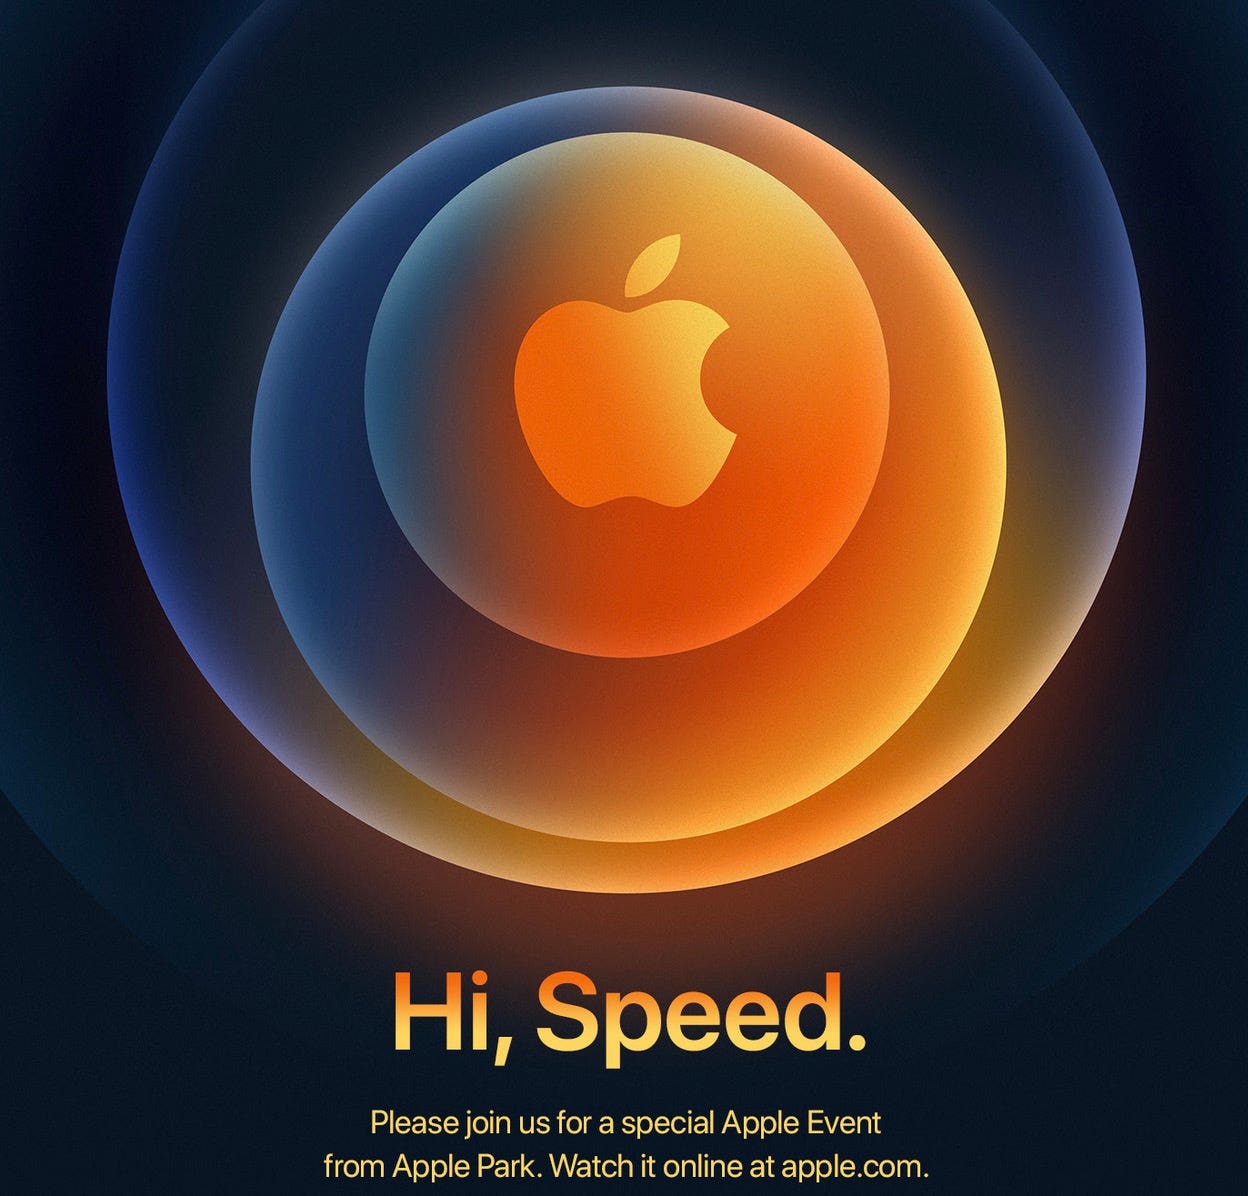 Apple's 'Hi, Speed' event: